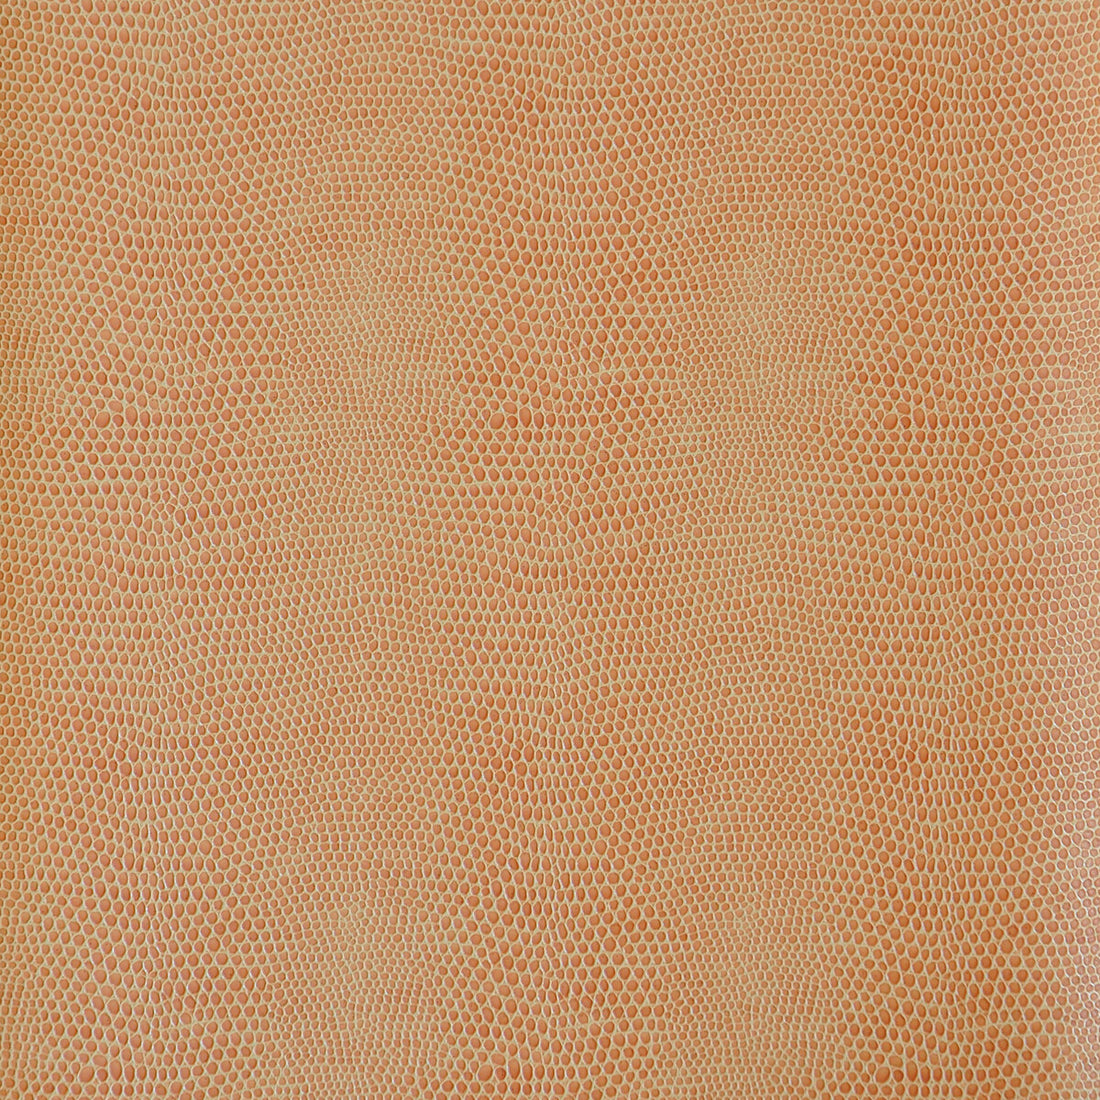 Kravet Design fabric in derek-616 color - pattern DEREK.616.0 - by Kravet Design